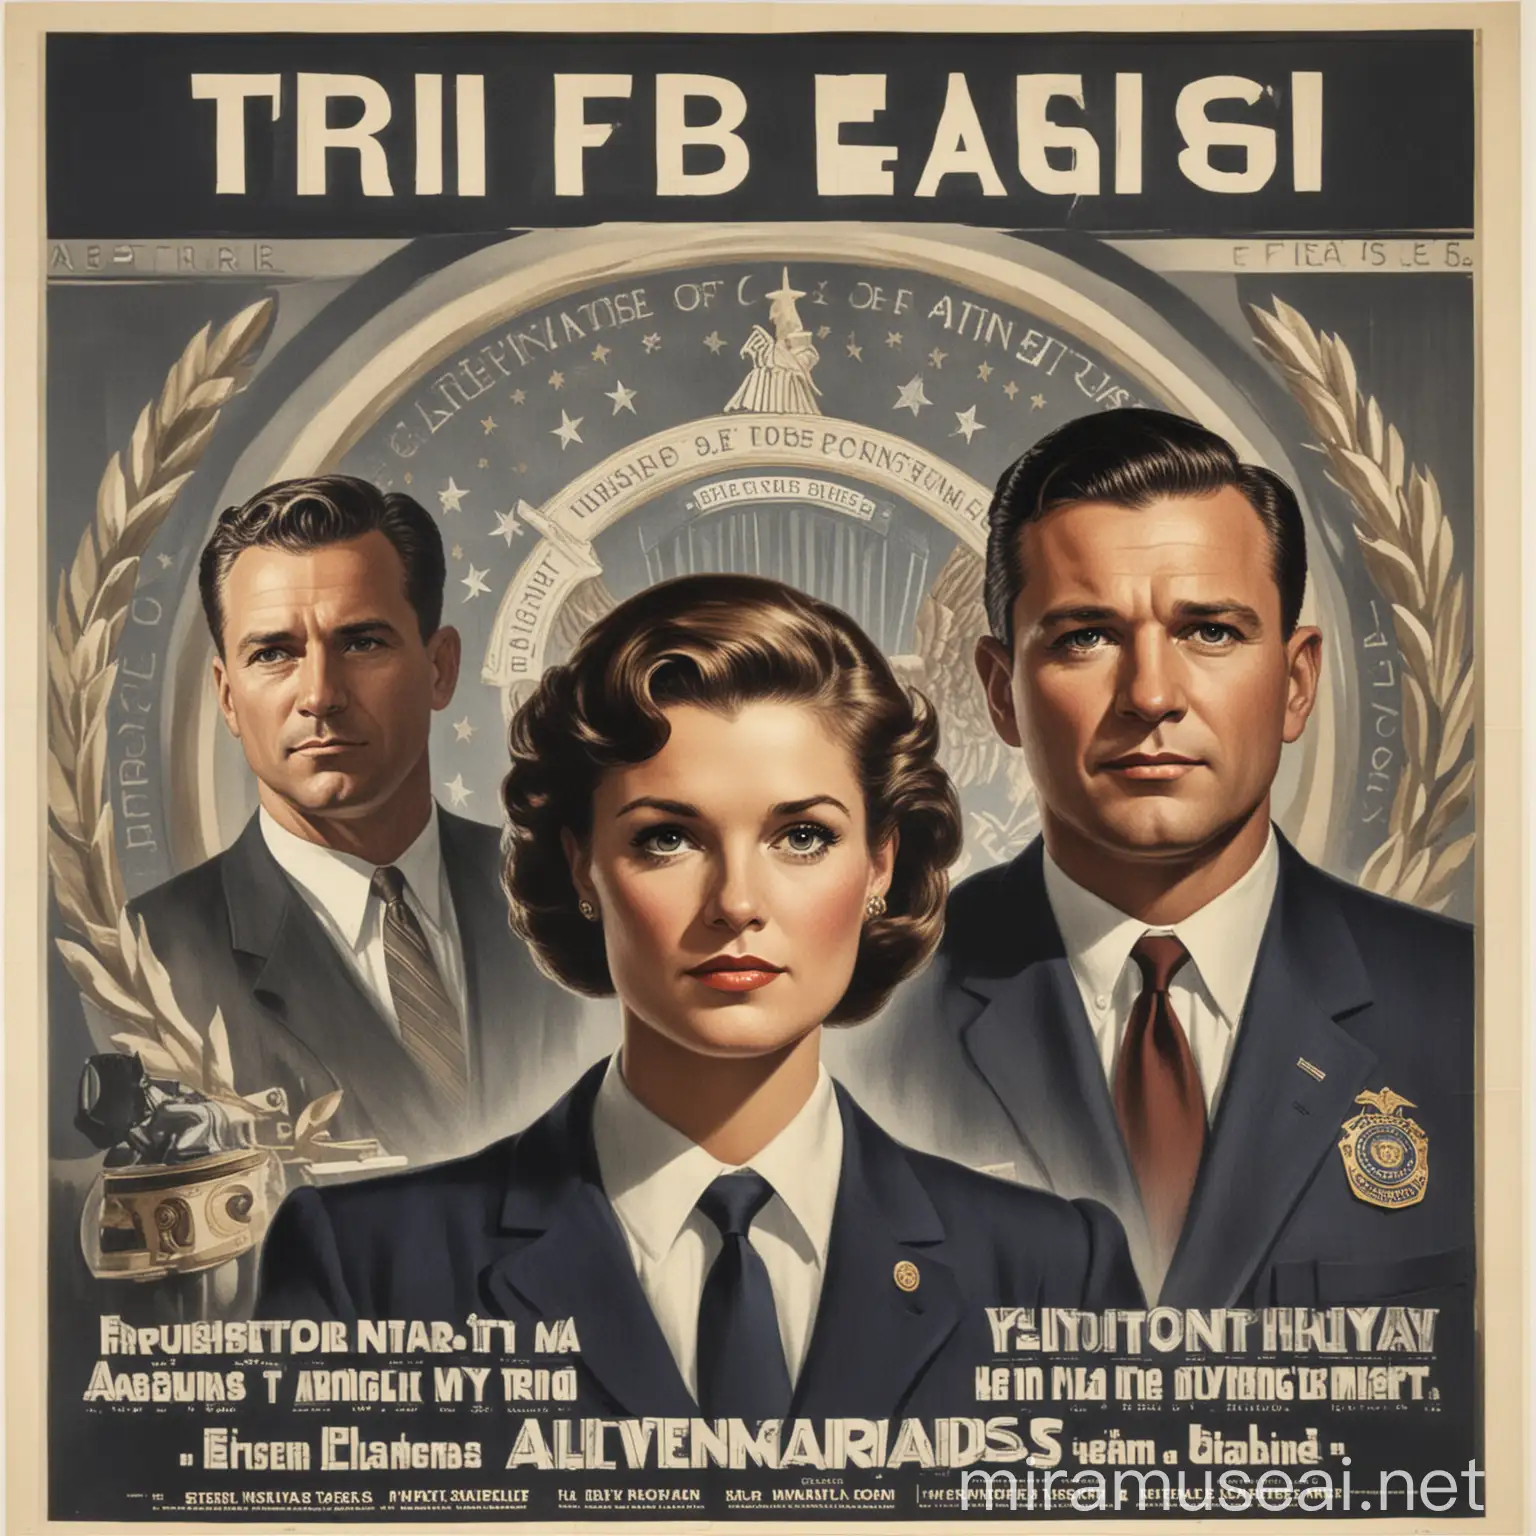 A Propaganda poster about FBI Agents